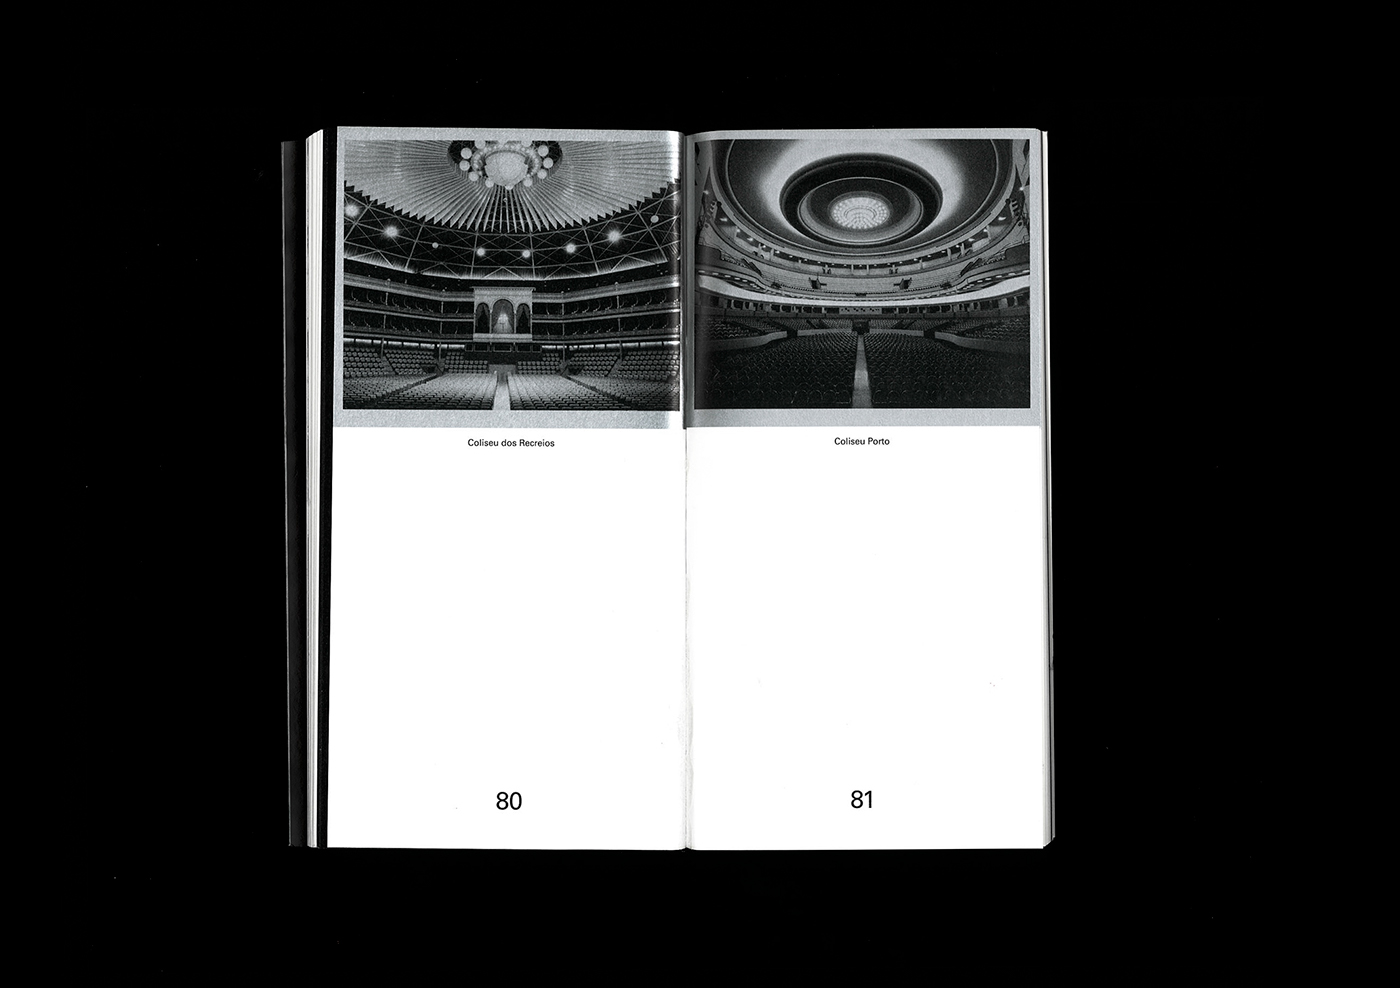 art direction  design graphic design  campaign editorial design  Photography  Theatre opera classical music